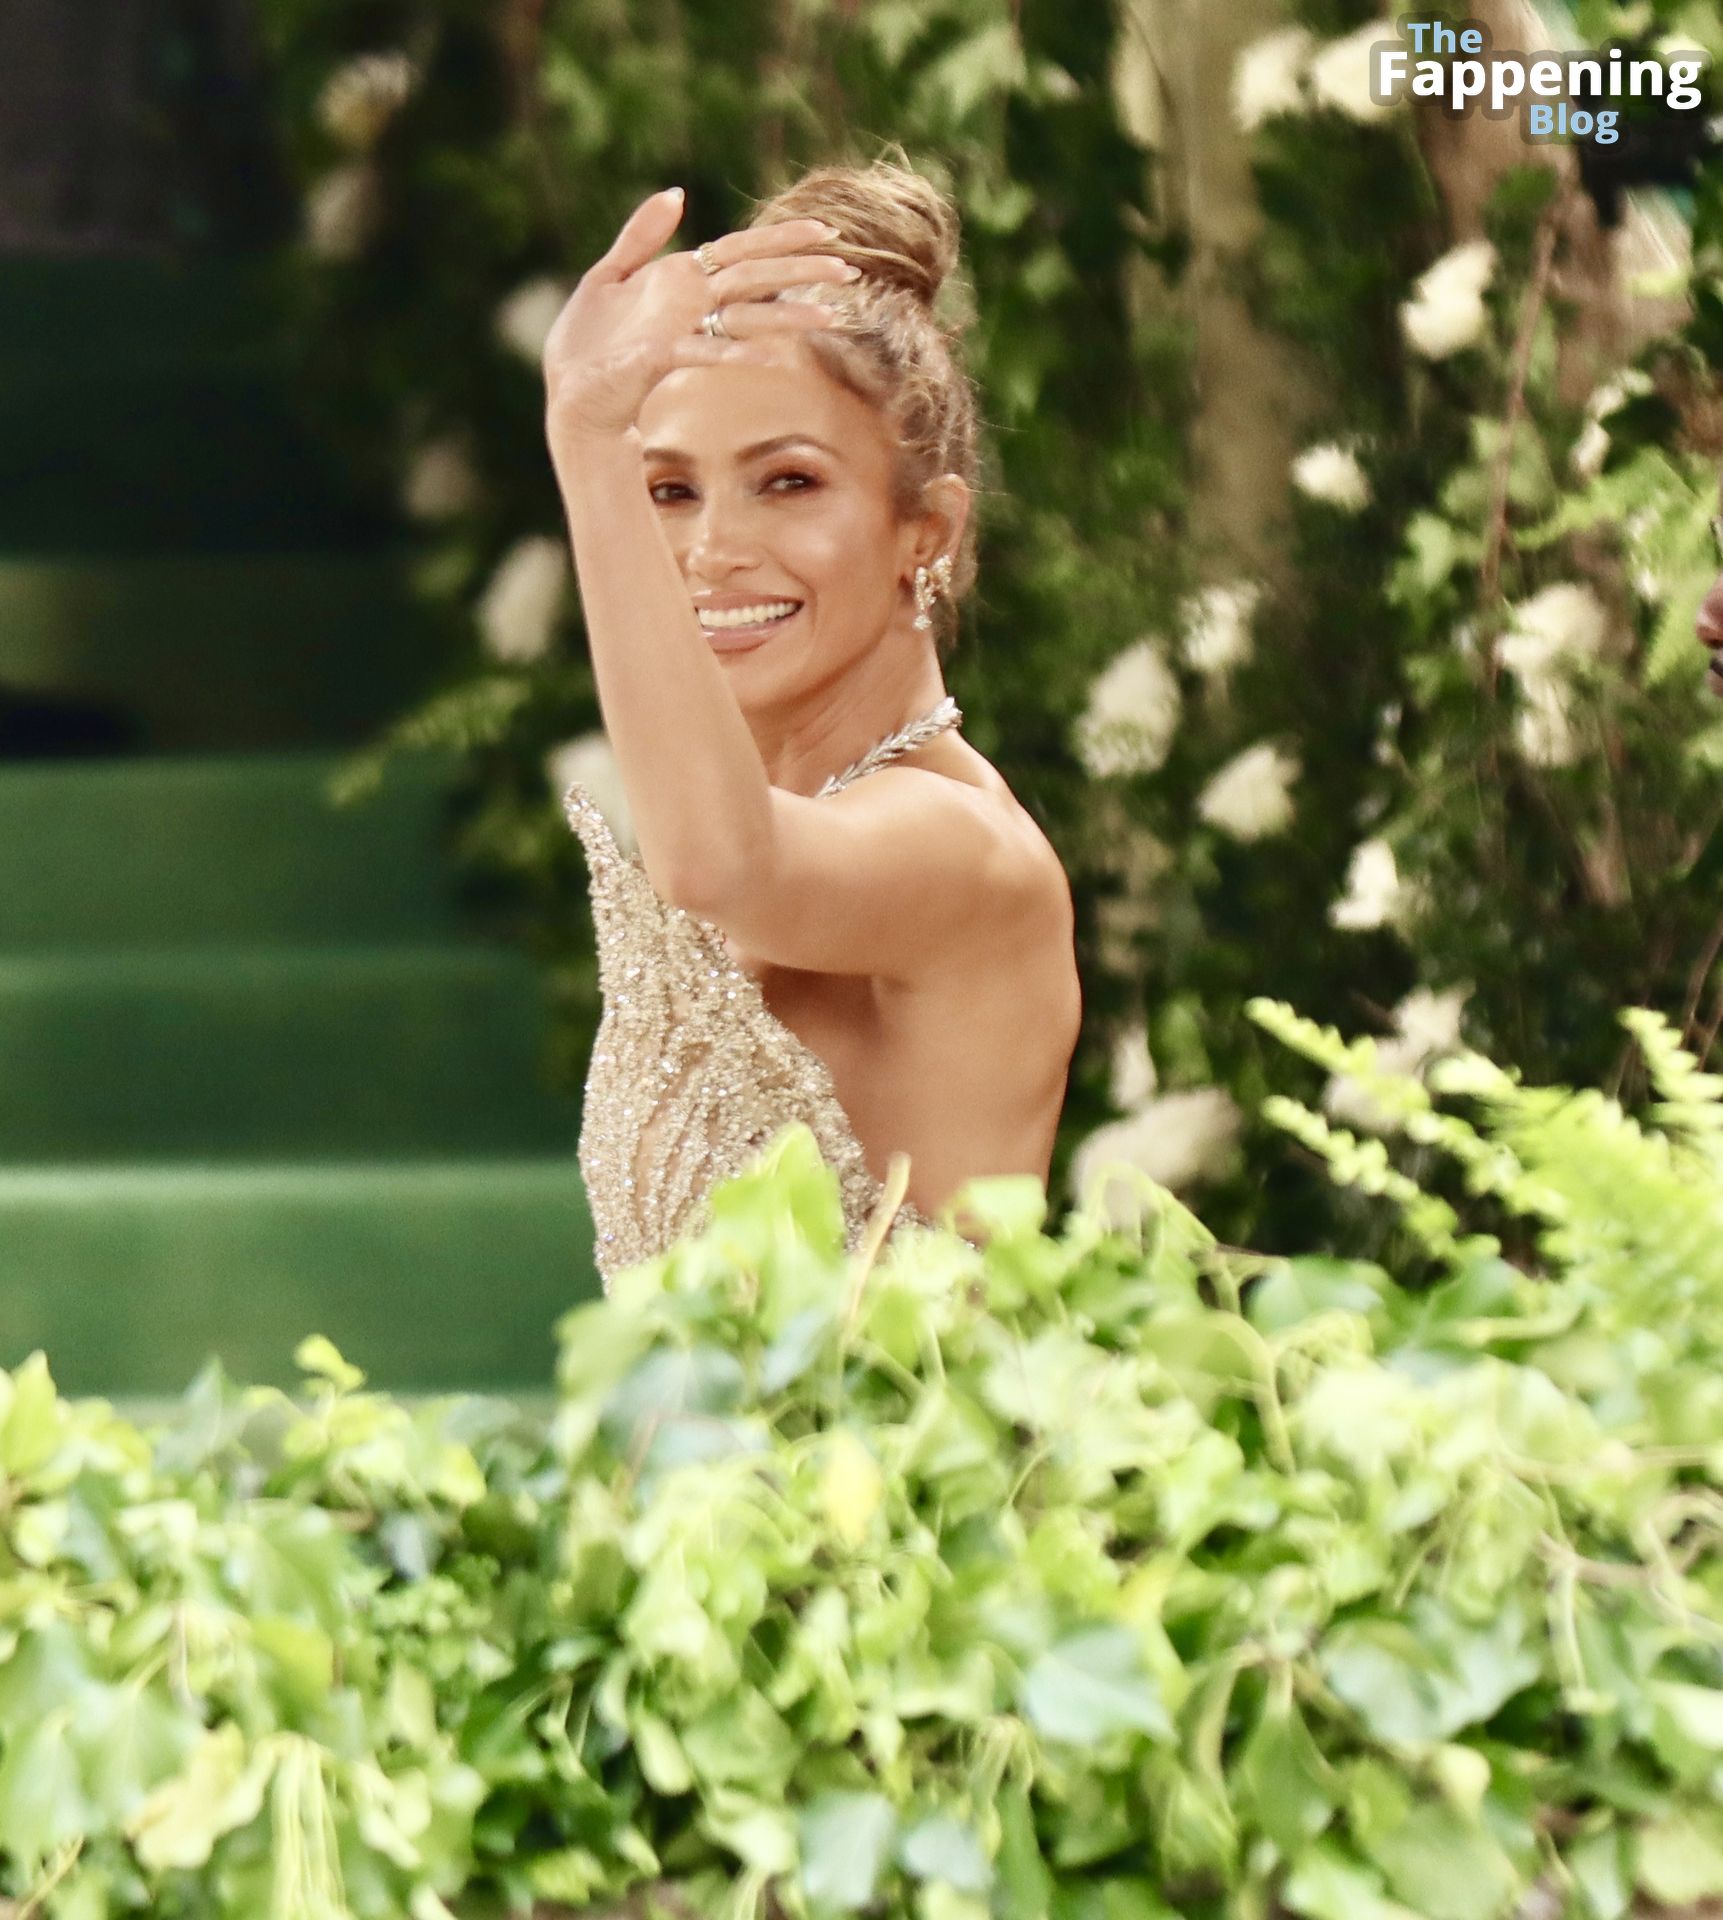 Jennifer-Lopez-Hot-127-The-Fappening-Blog.jpg